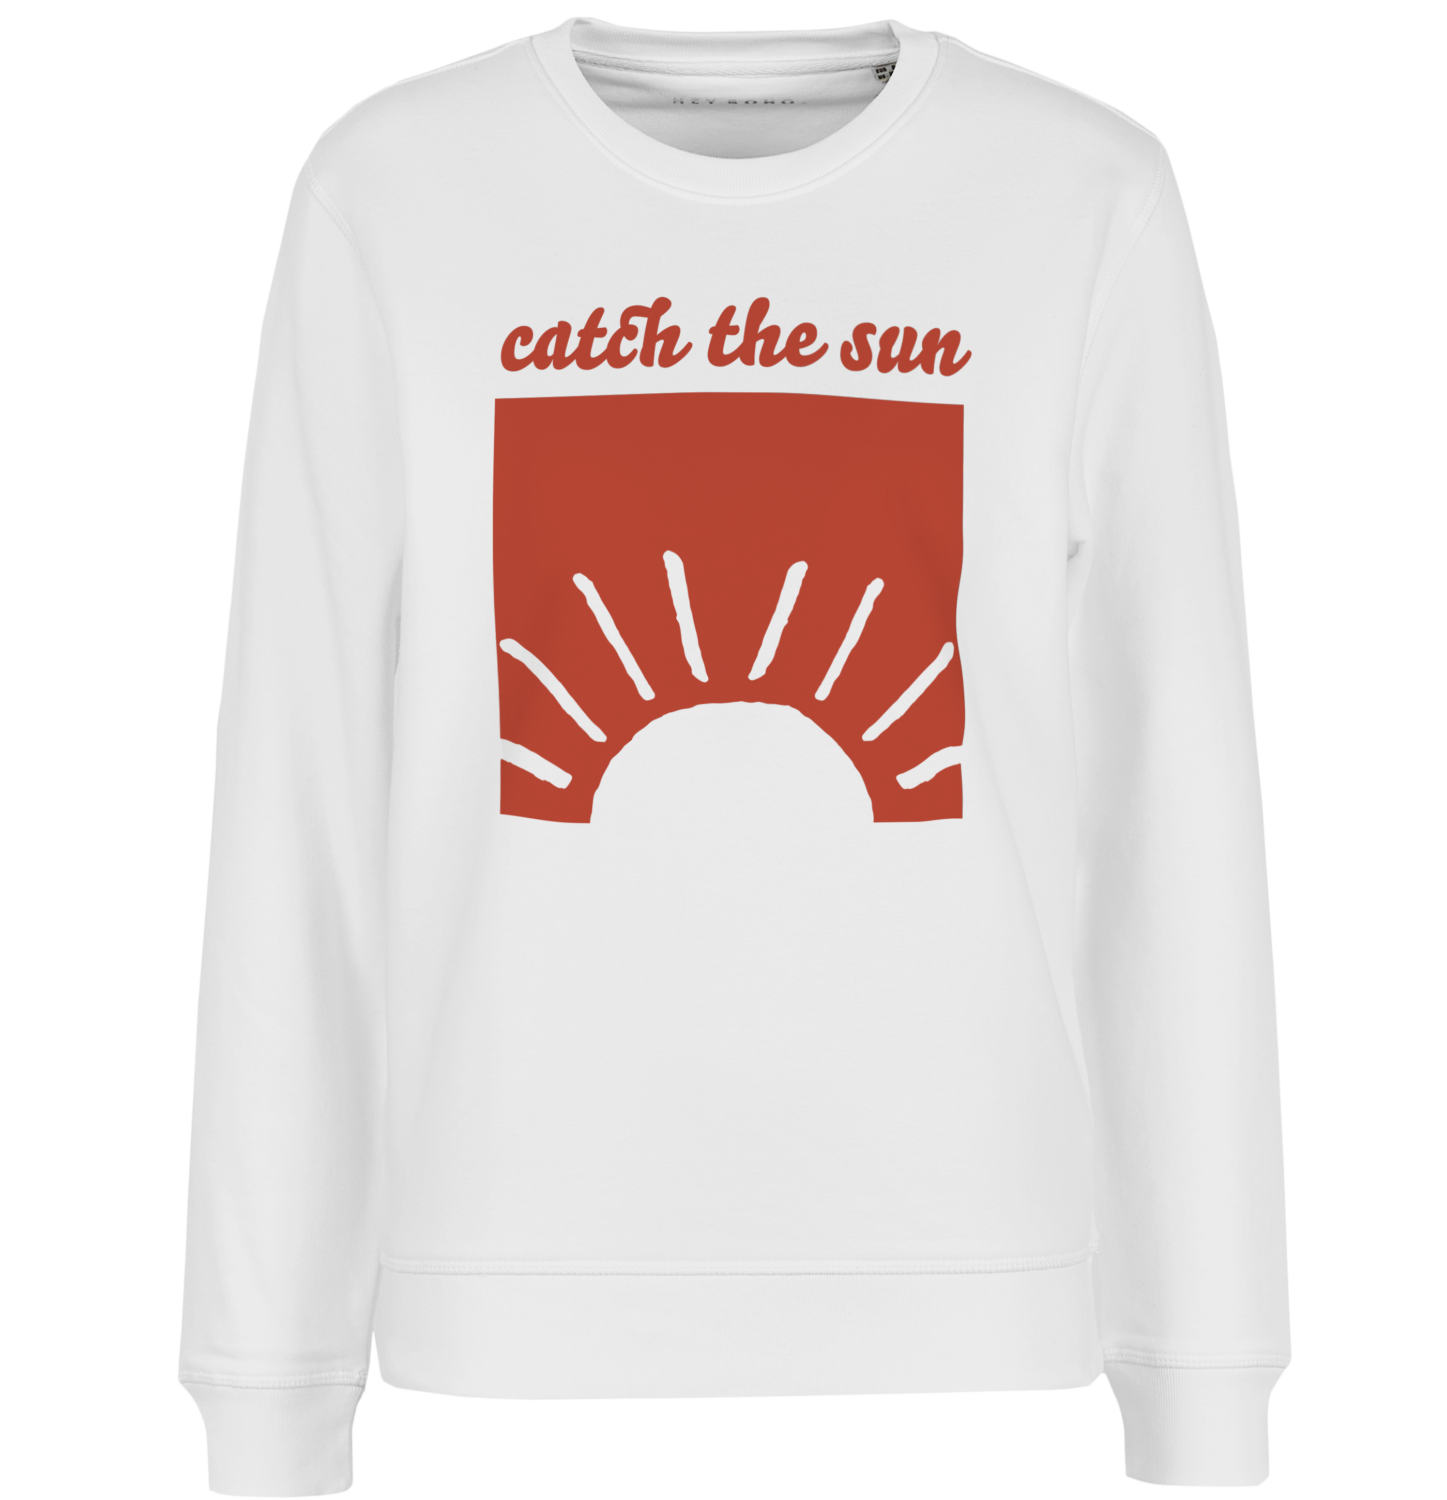 Hey Soho Sweater Catch the sun